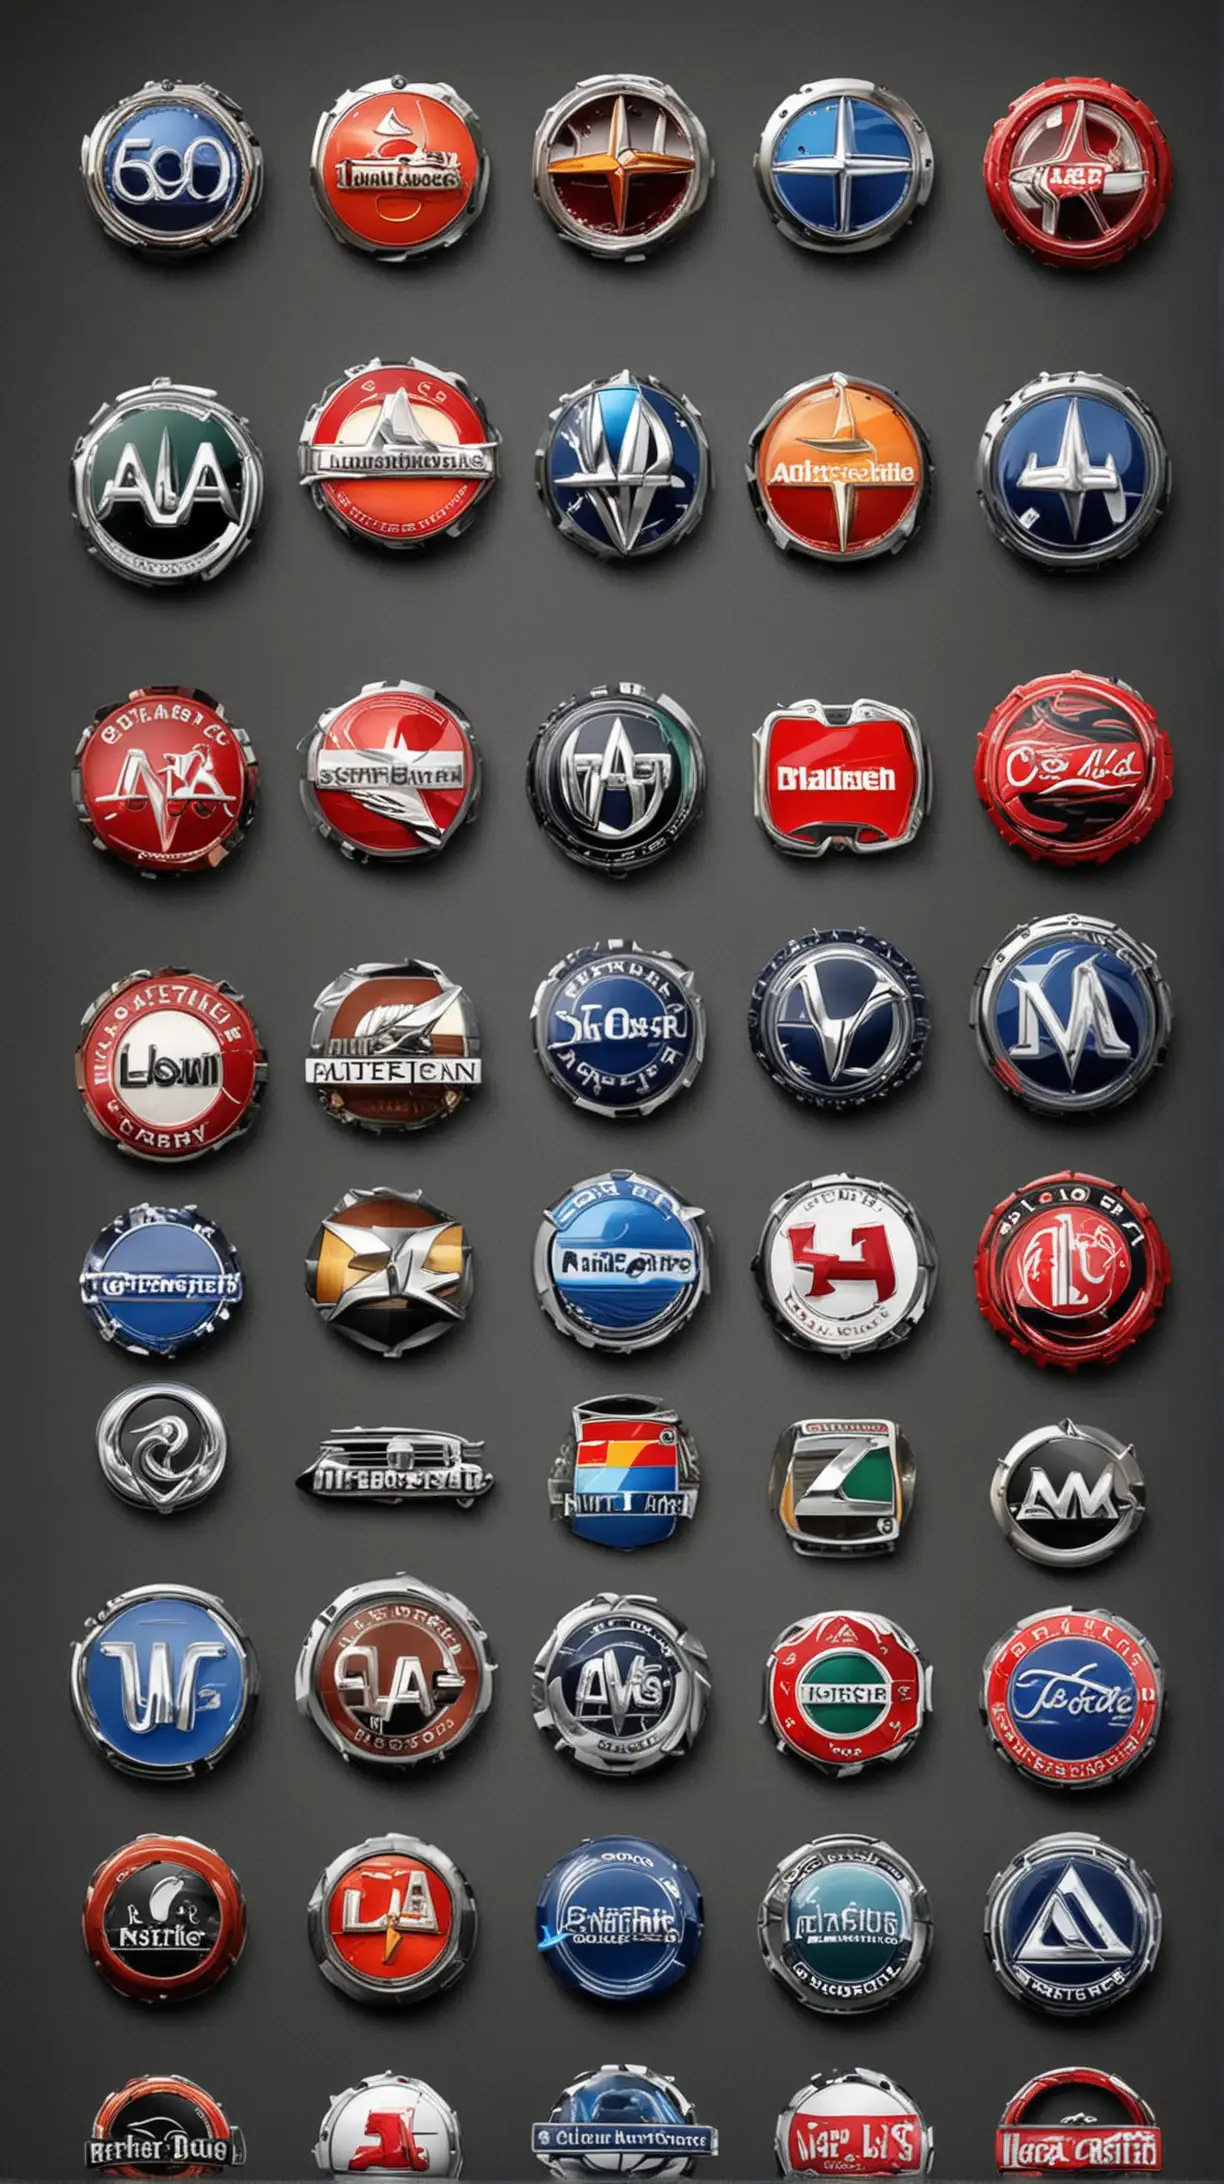 Logotypes of Major Automobile Brands Displayed Together